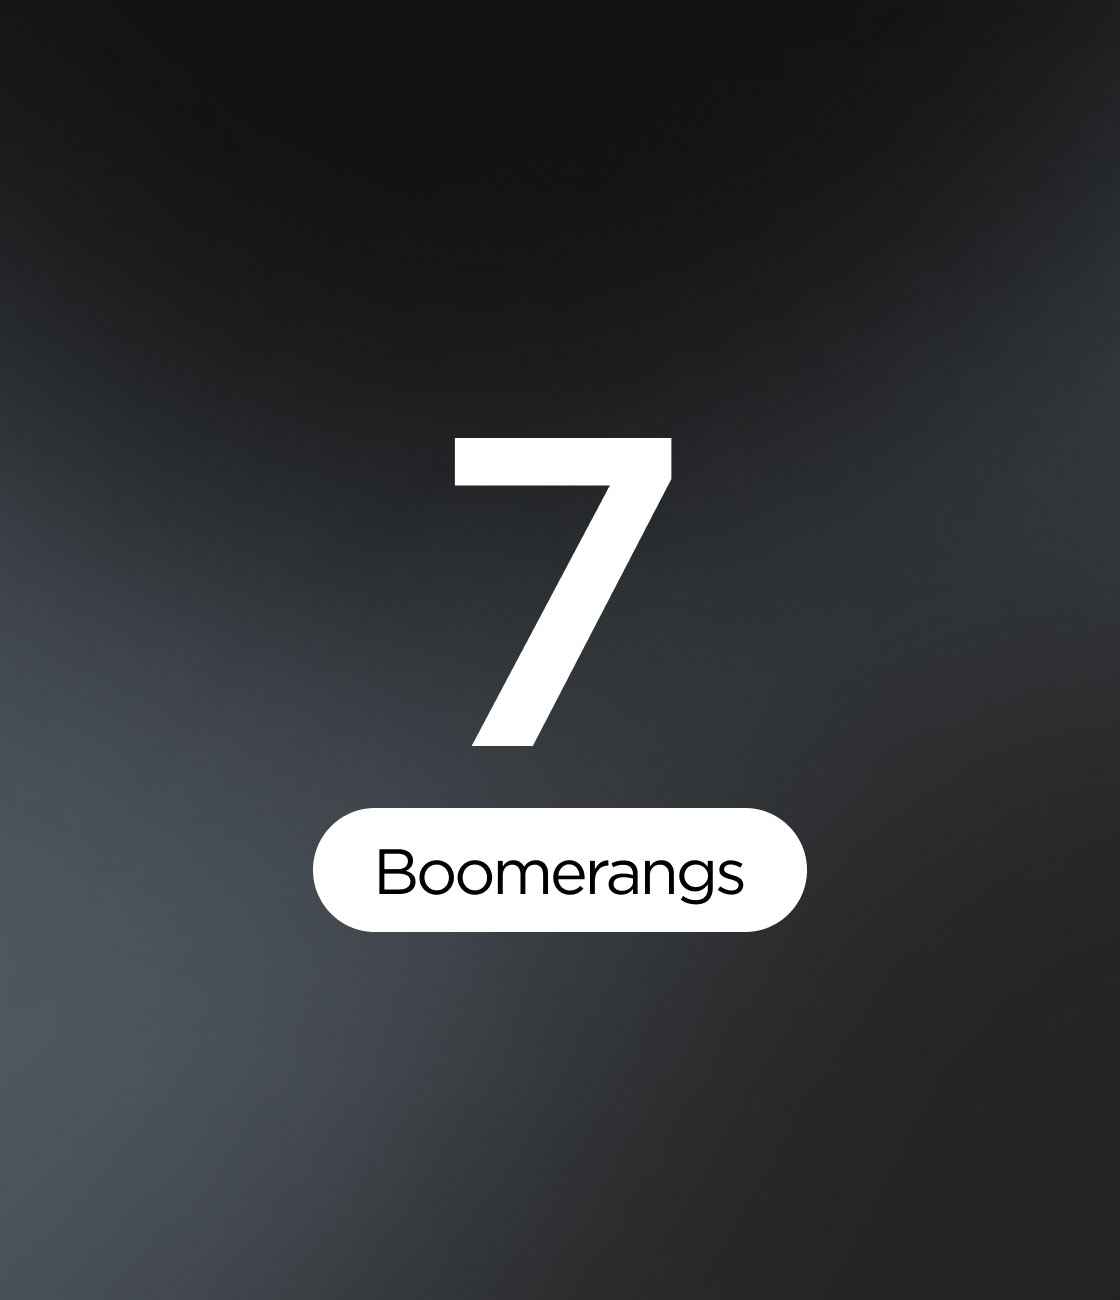 7 boomerangs